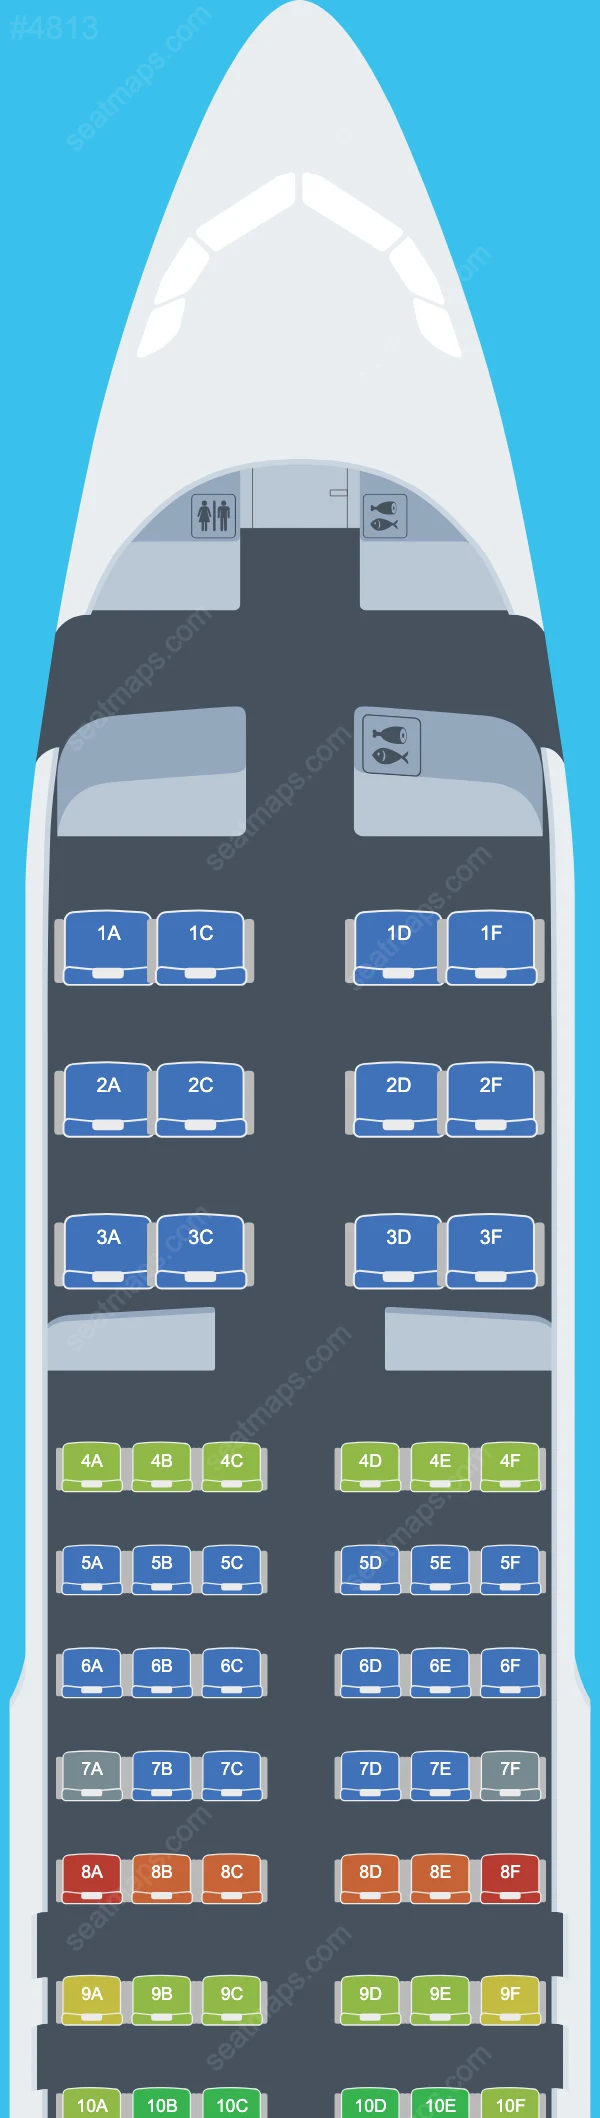 Yemenia Airbus A320 Seat Maps A320-200